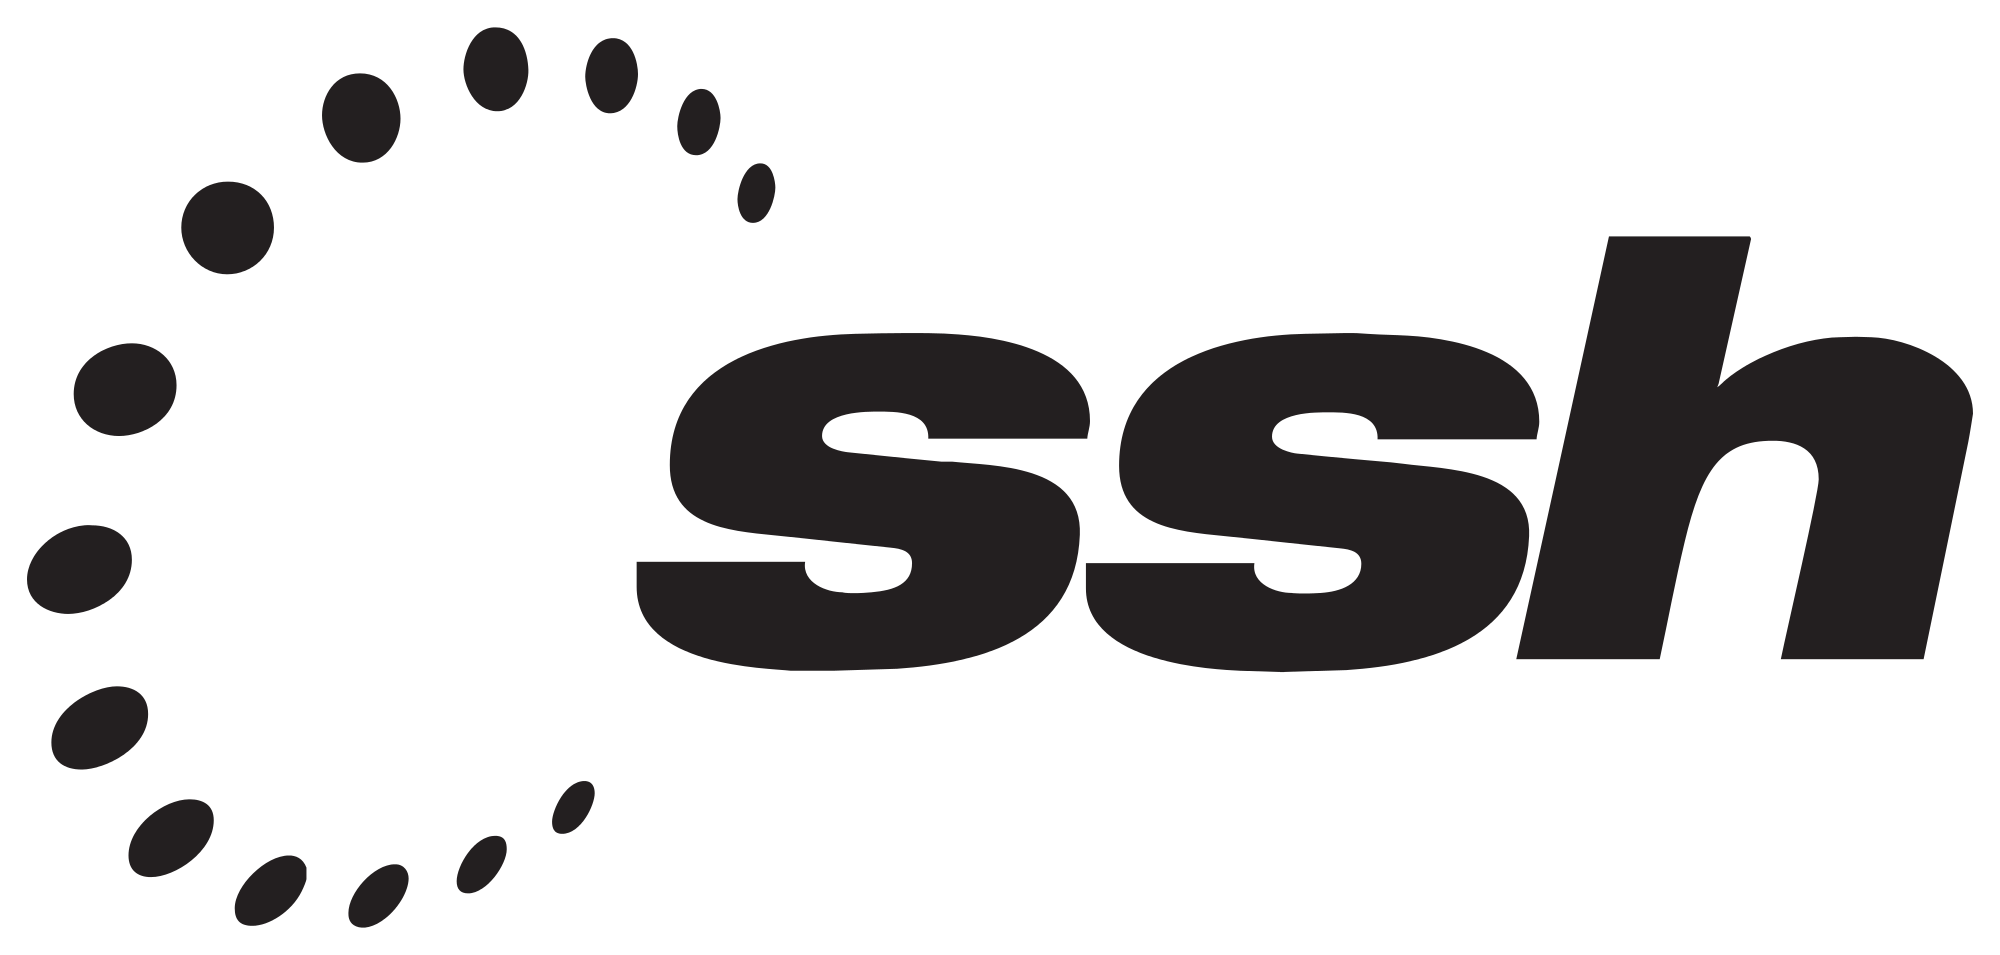 SSH_Communications_Security_logo.svg